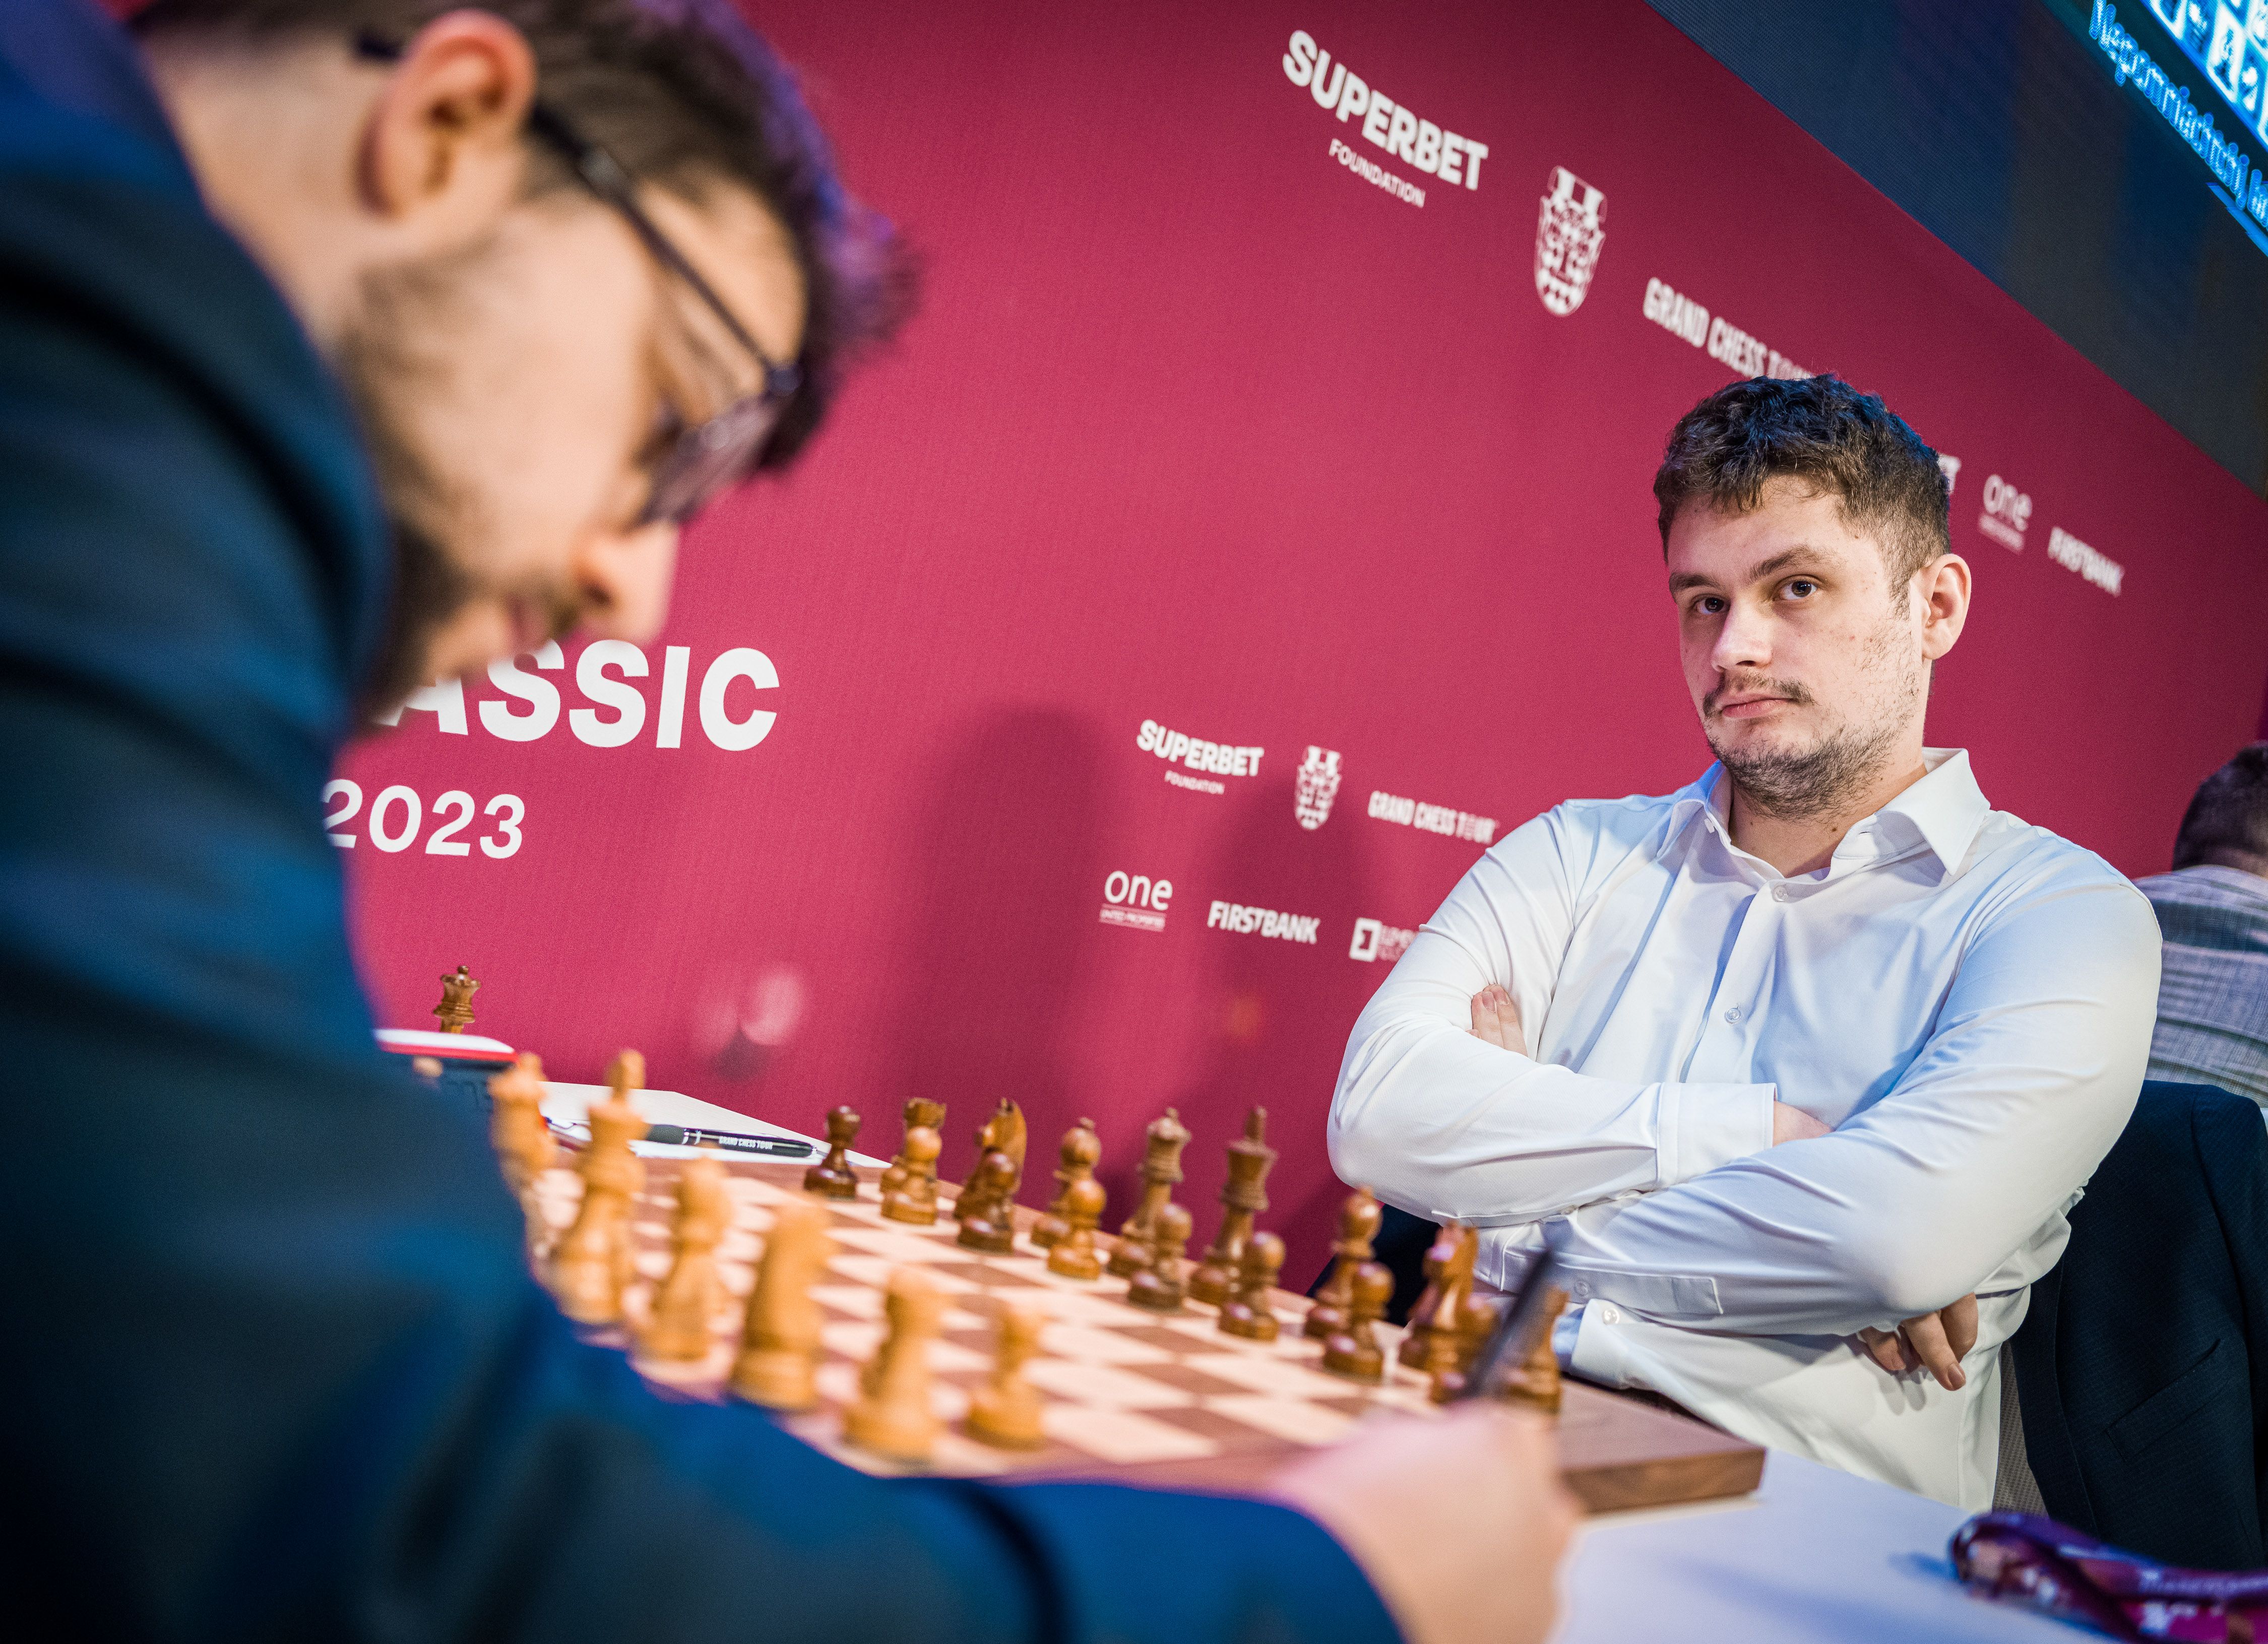 Grandmaster Fabiano Caruana Crowned 2023 Superbet Chess Classic